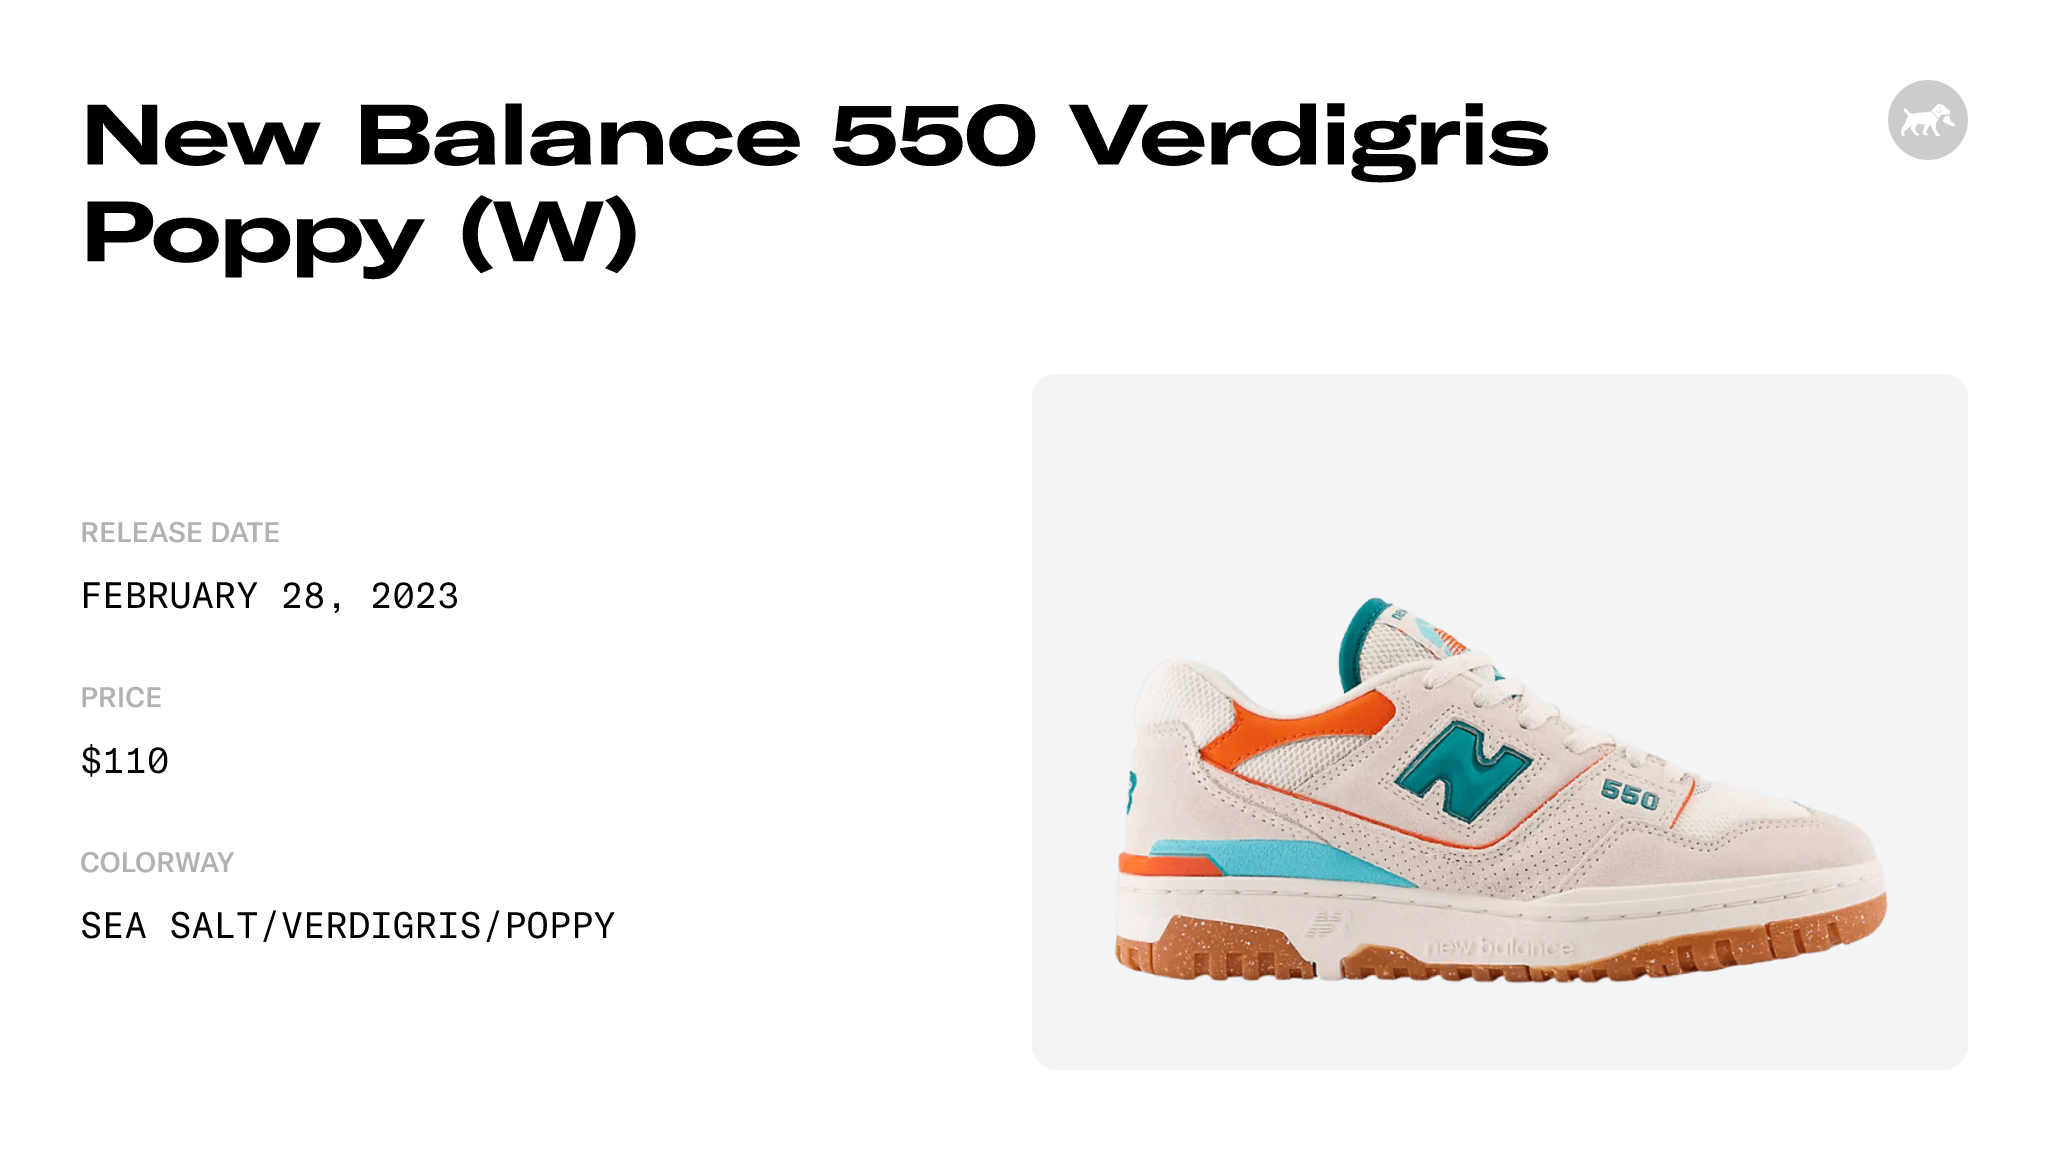 New Balance 550 Verdigris Poppy (W) - BBW550DA Raffles and Release